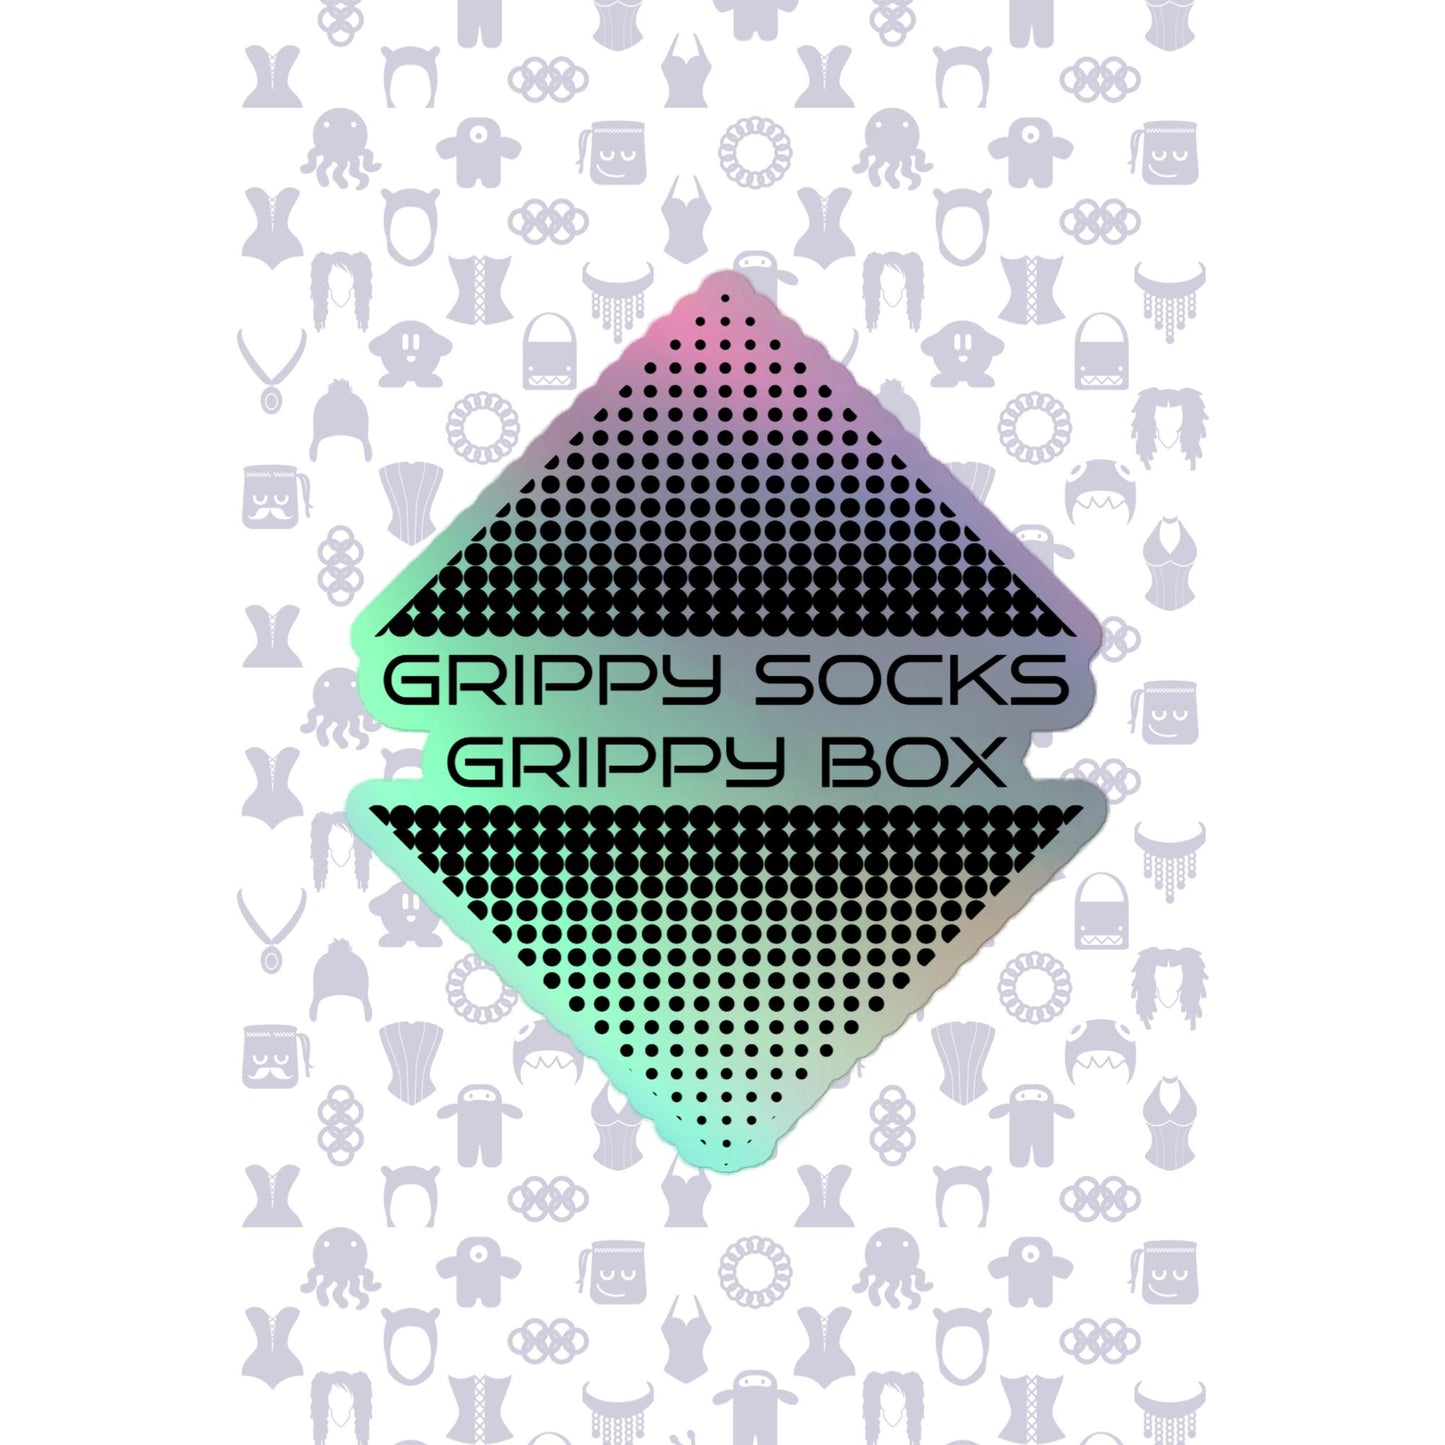 Grippy Socks Grippy Box Holographic stickers